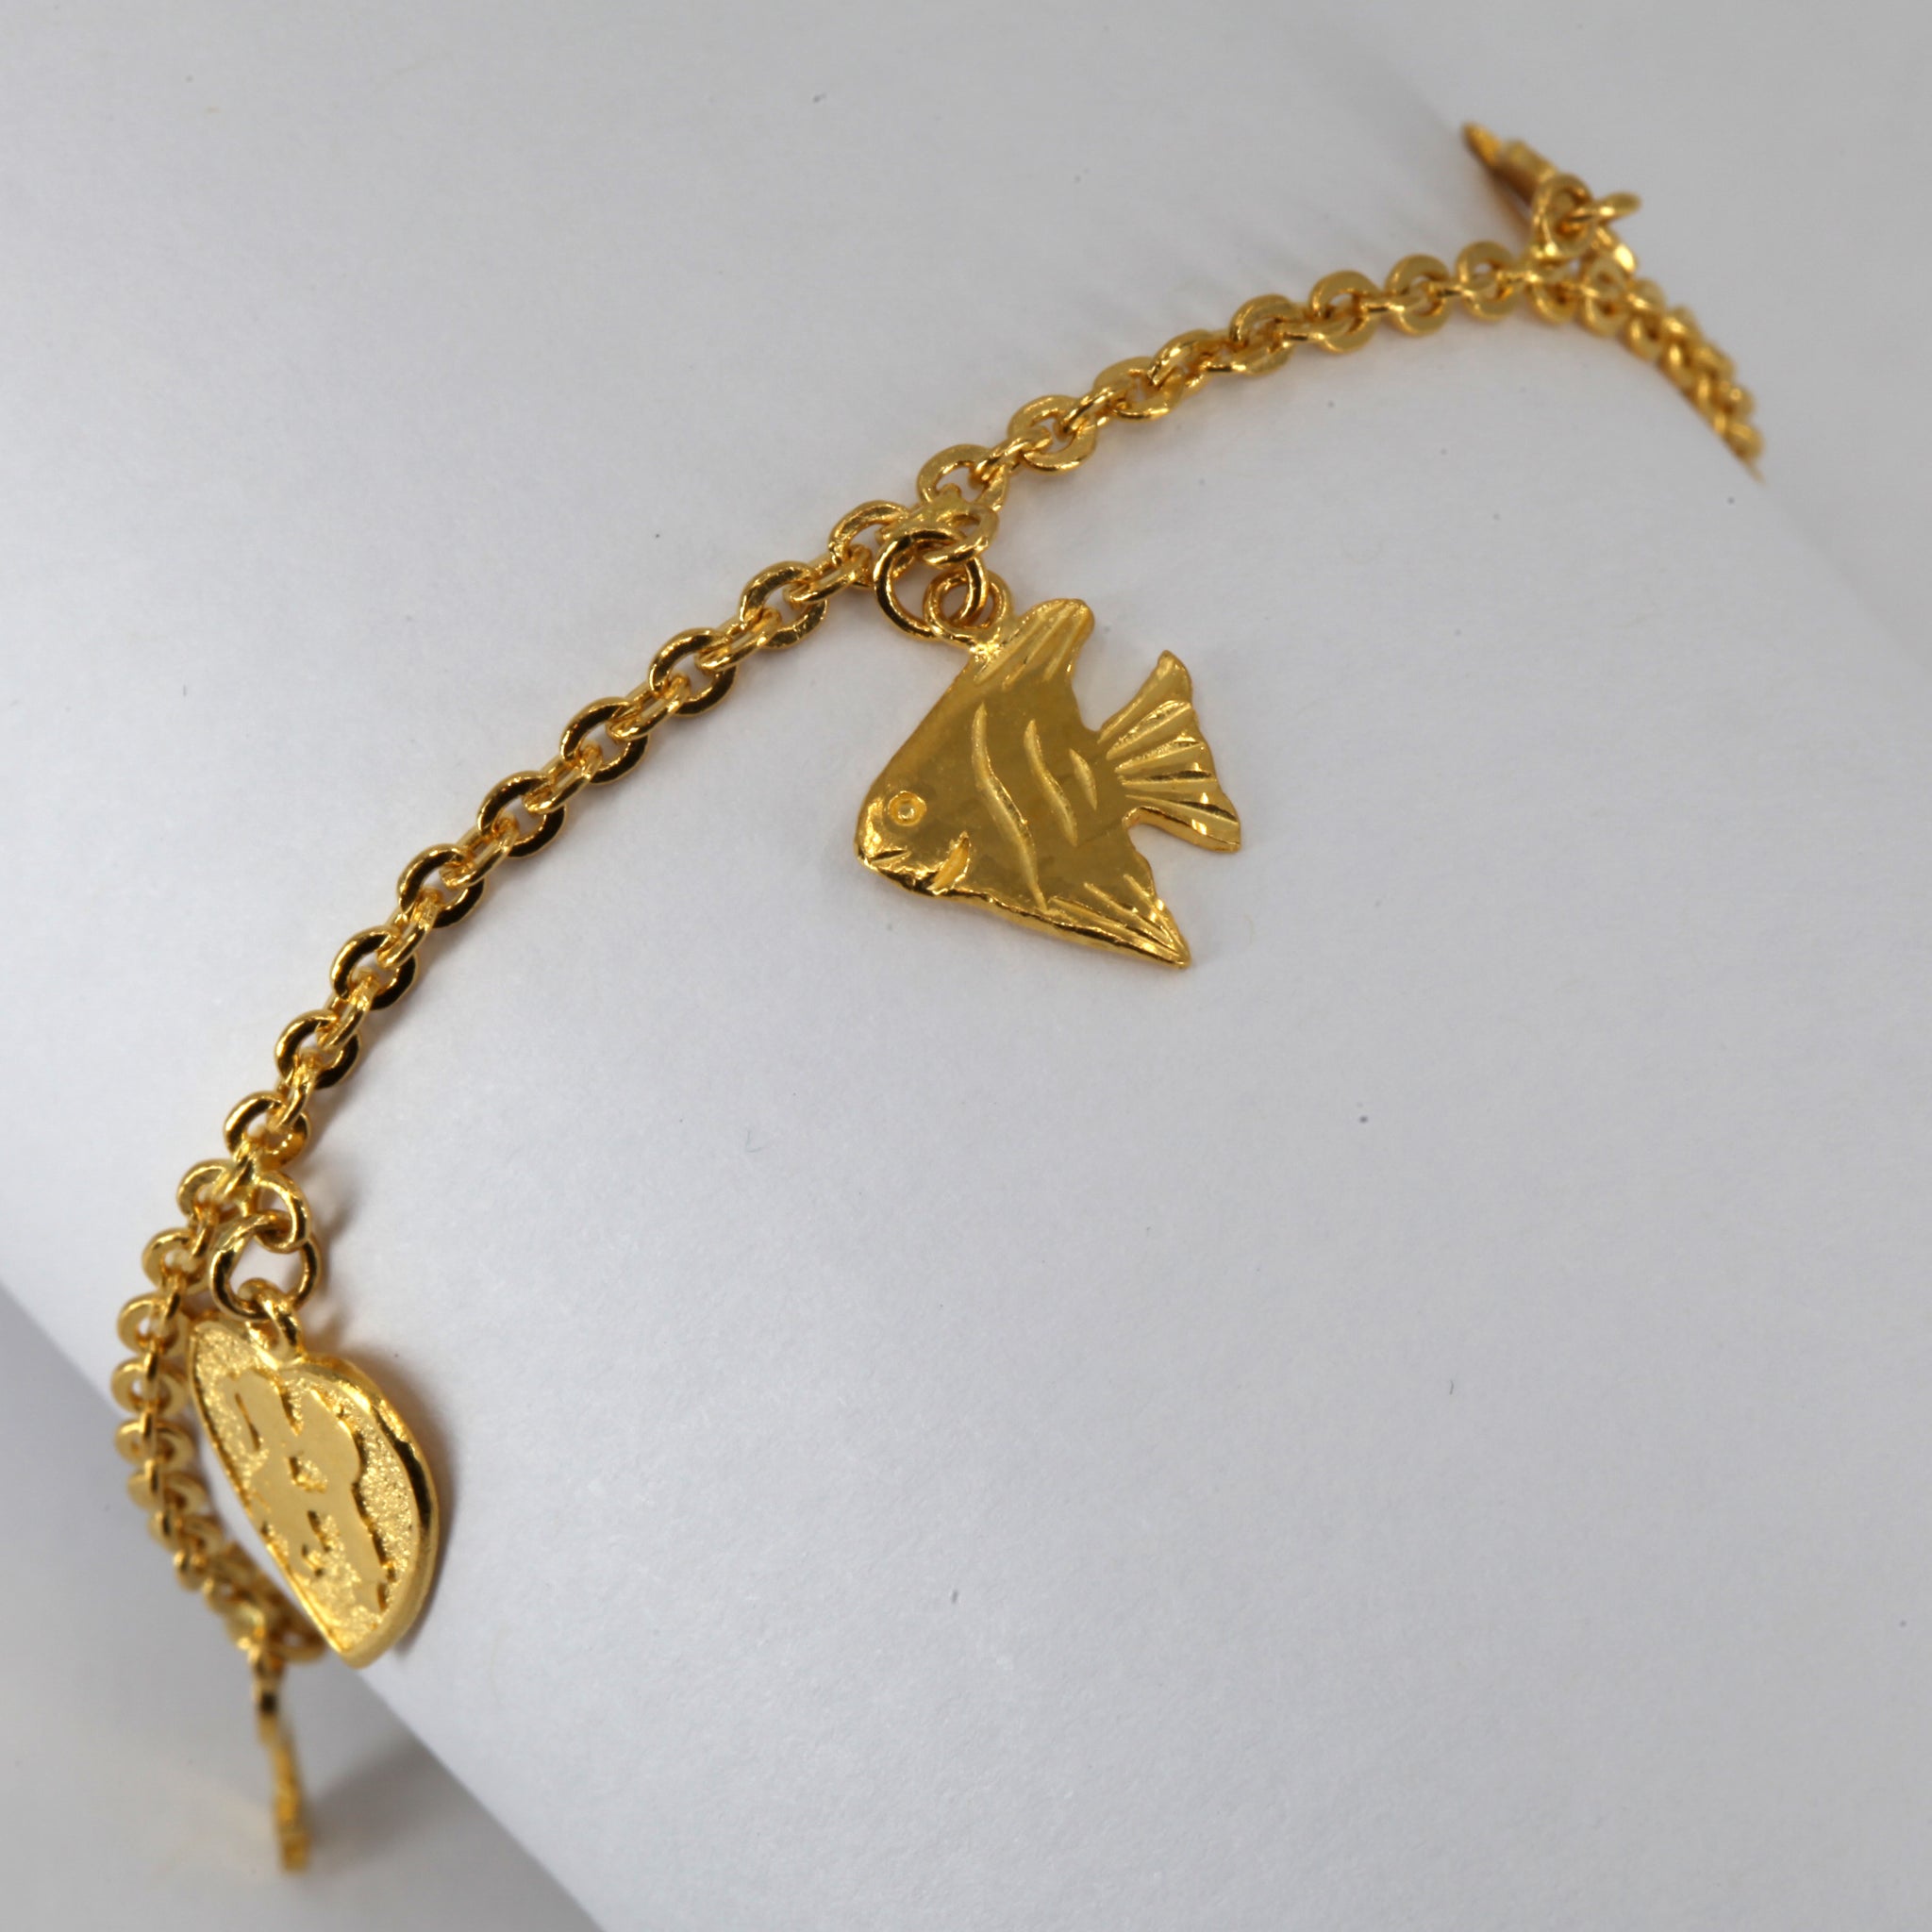 24K Solid Yellow Gold Charm Boat Fish Heart Key Lock Ball Bracelet 10.2 Grams